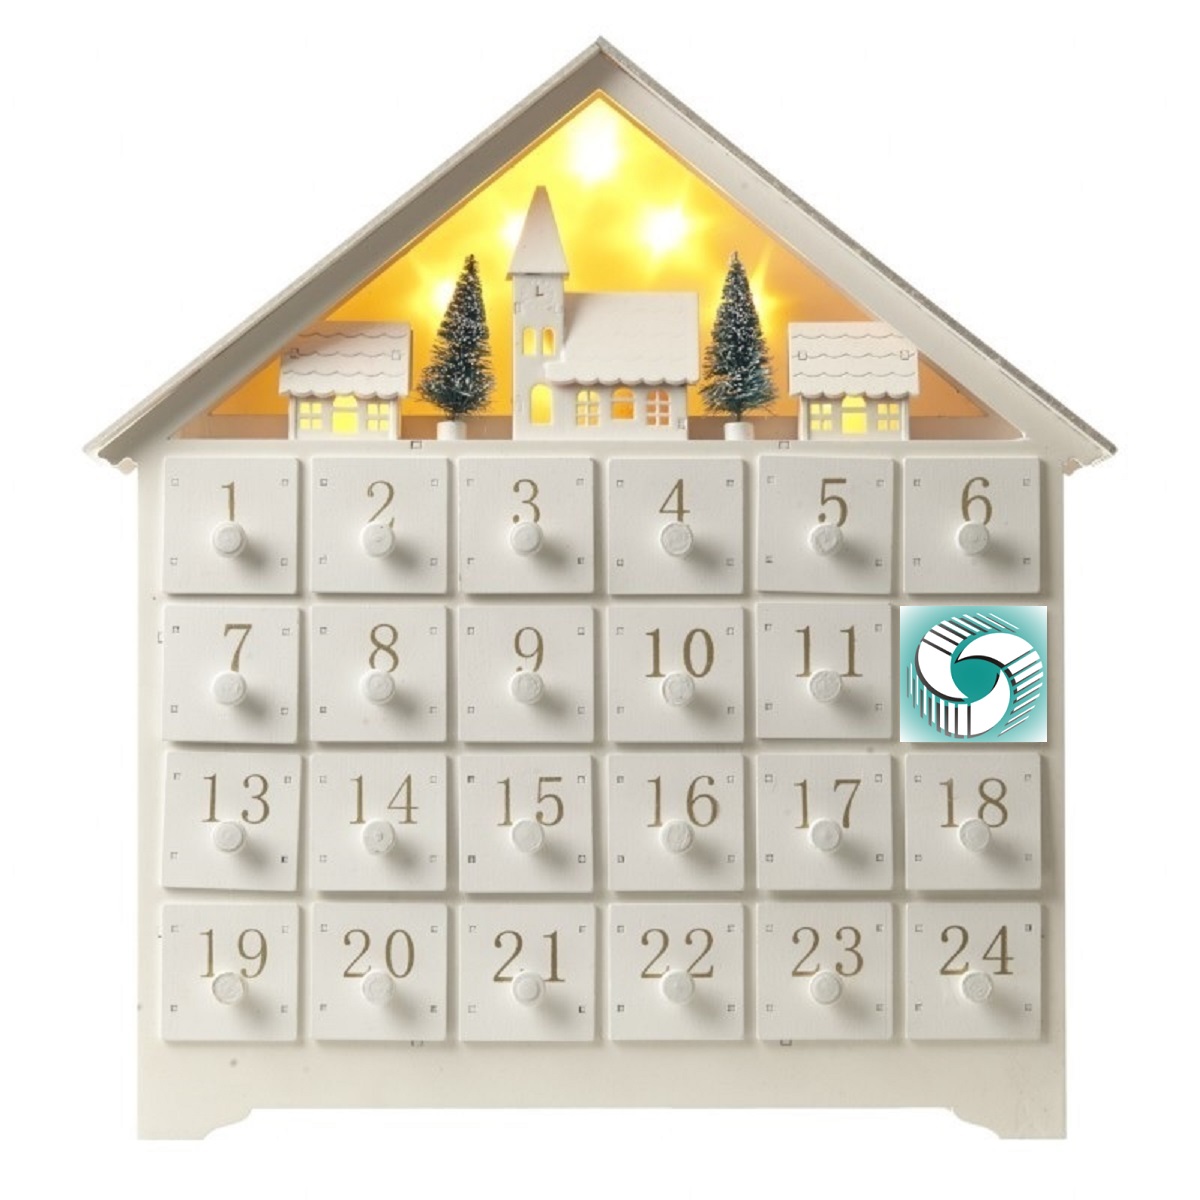 Day 12 – Frontier’s Advent Calendar